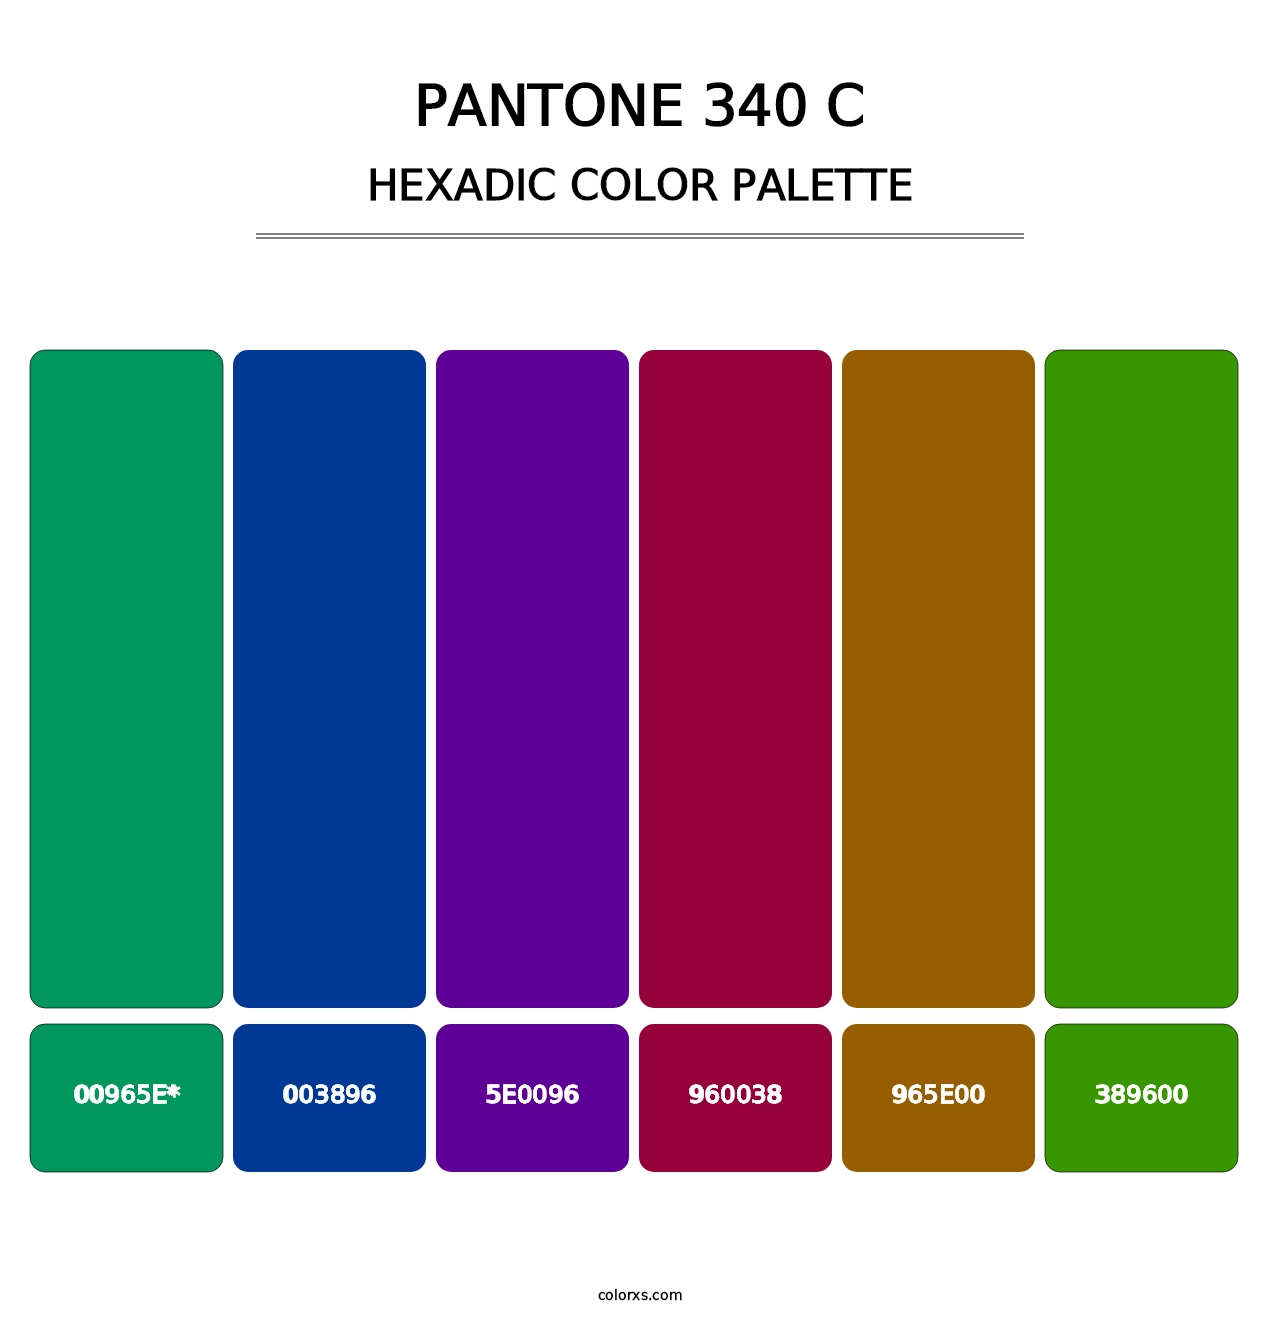 PANTONE 340 C - Hexadic Color Palette